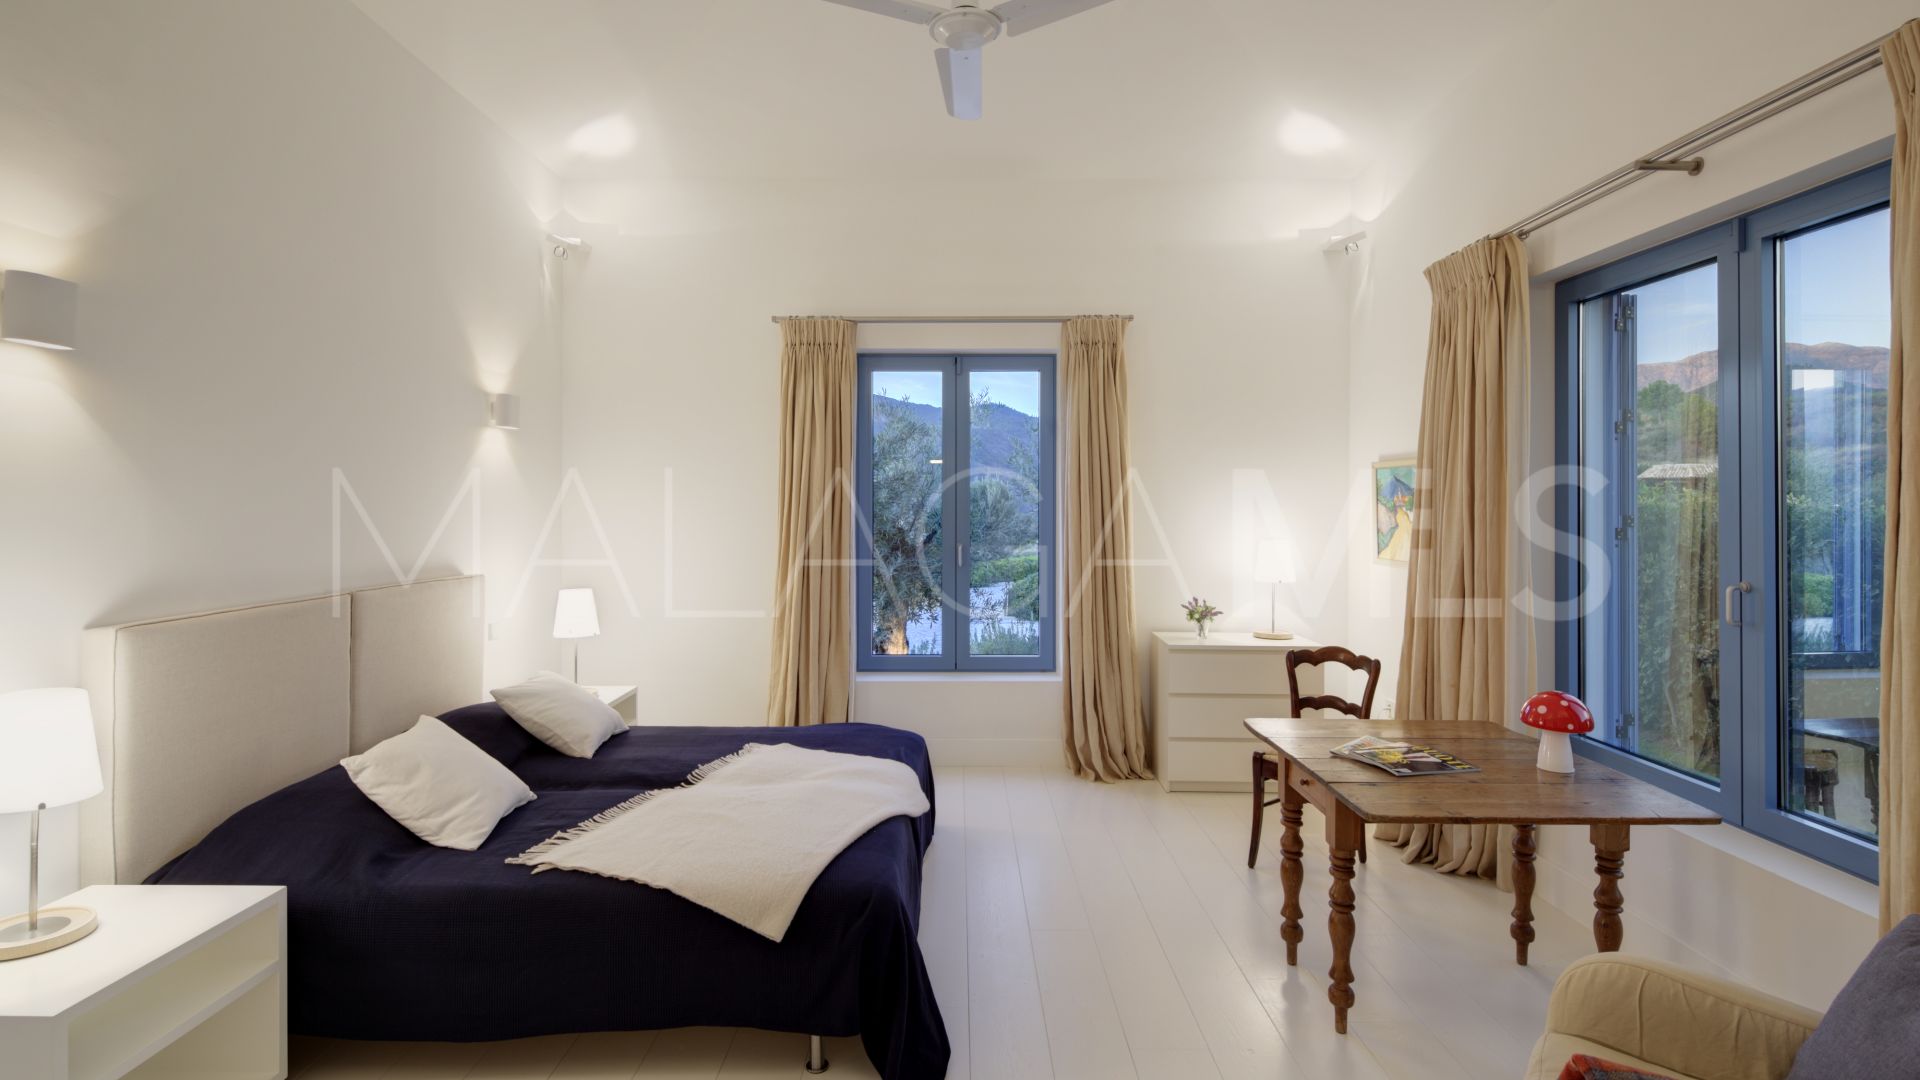 5 bedrooms villa in Monte Mayor for sale